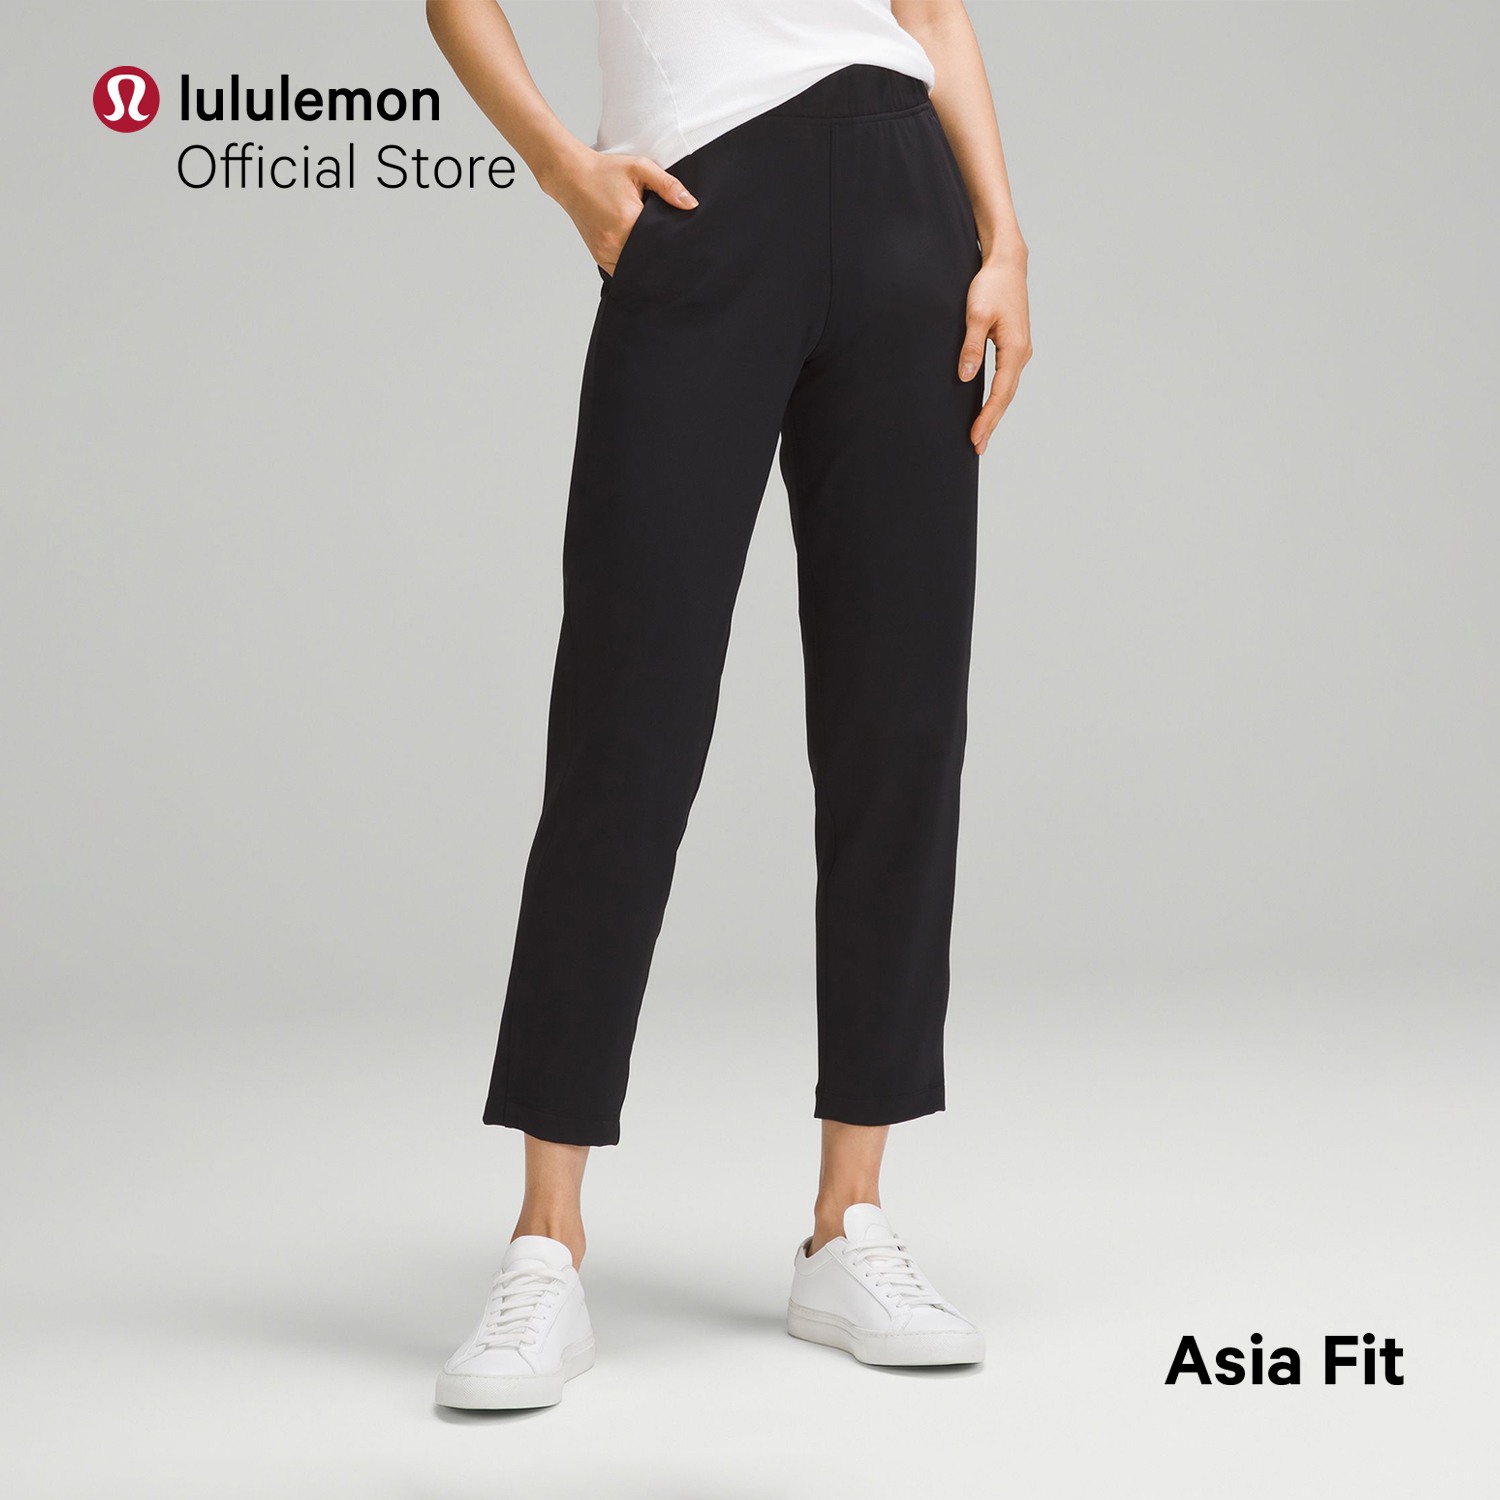 Lulu Yoga Pants Align Leggings 12 Color 1903 for  Running/Yoga/Sports/Fitness Women's pants